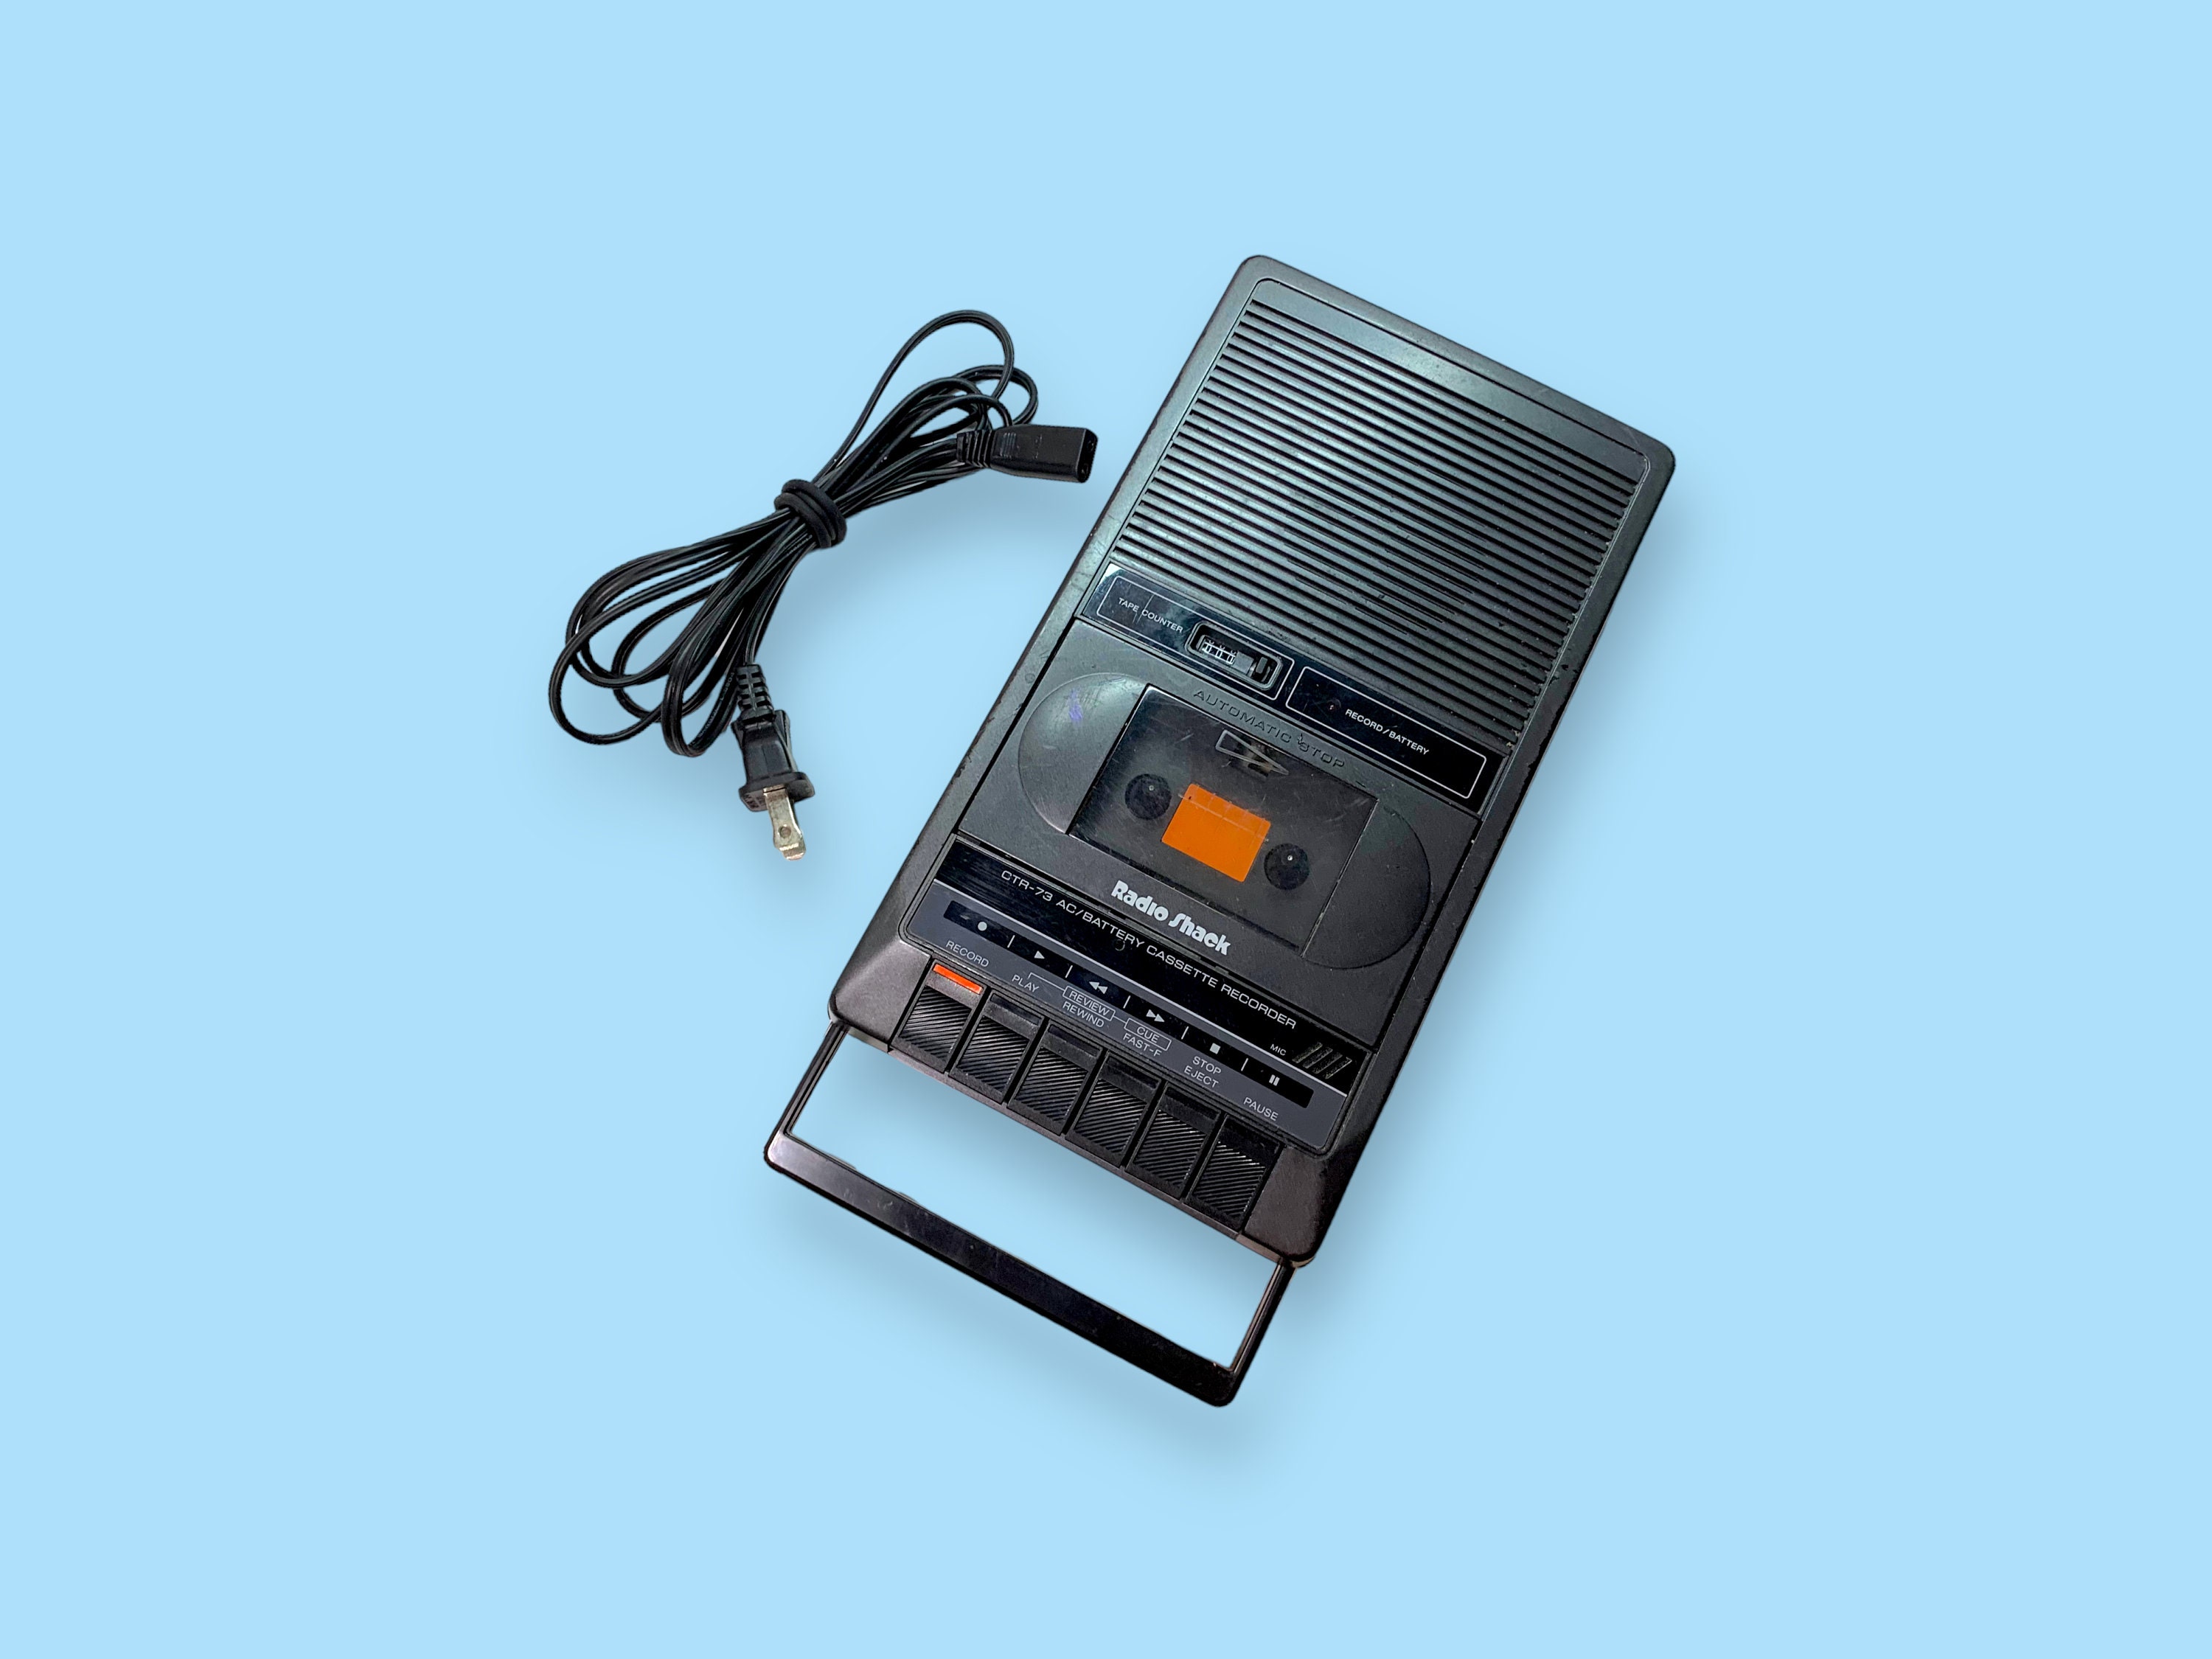 Vintage Portable Plastic Radio/ Retro Stereo Cassette Boombox Sharp/ Sharp  Radio Cassette Boombox / Vintage Electronics/ 80s 